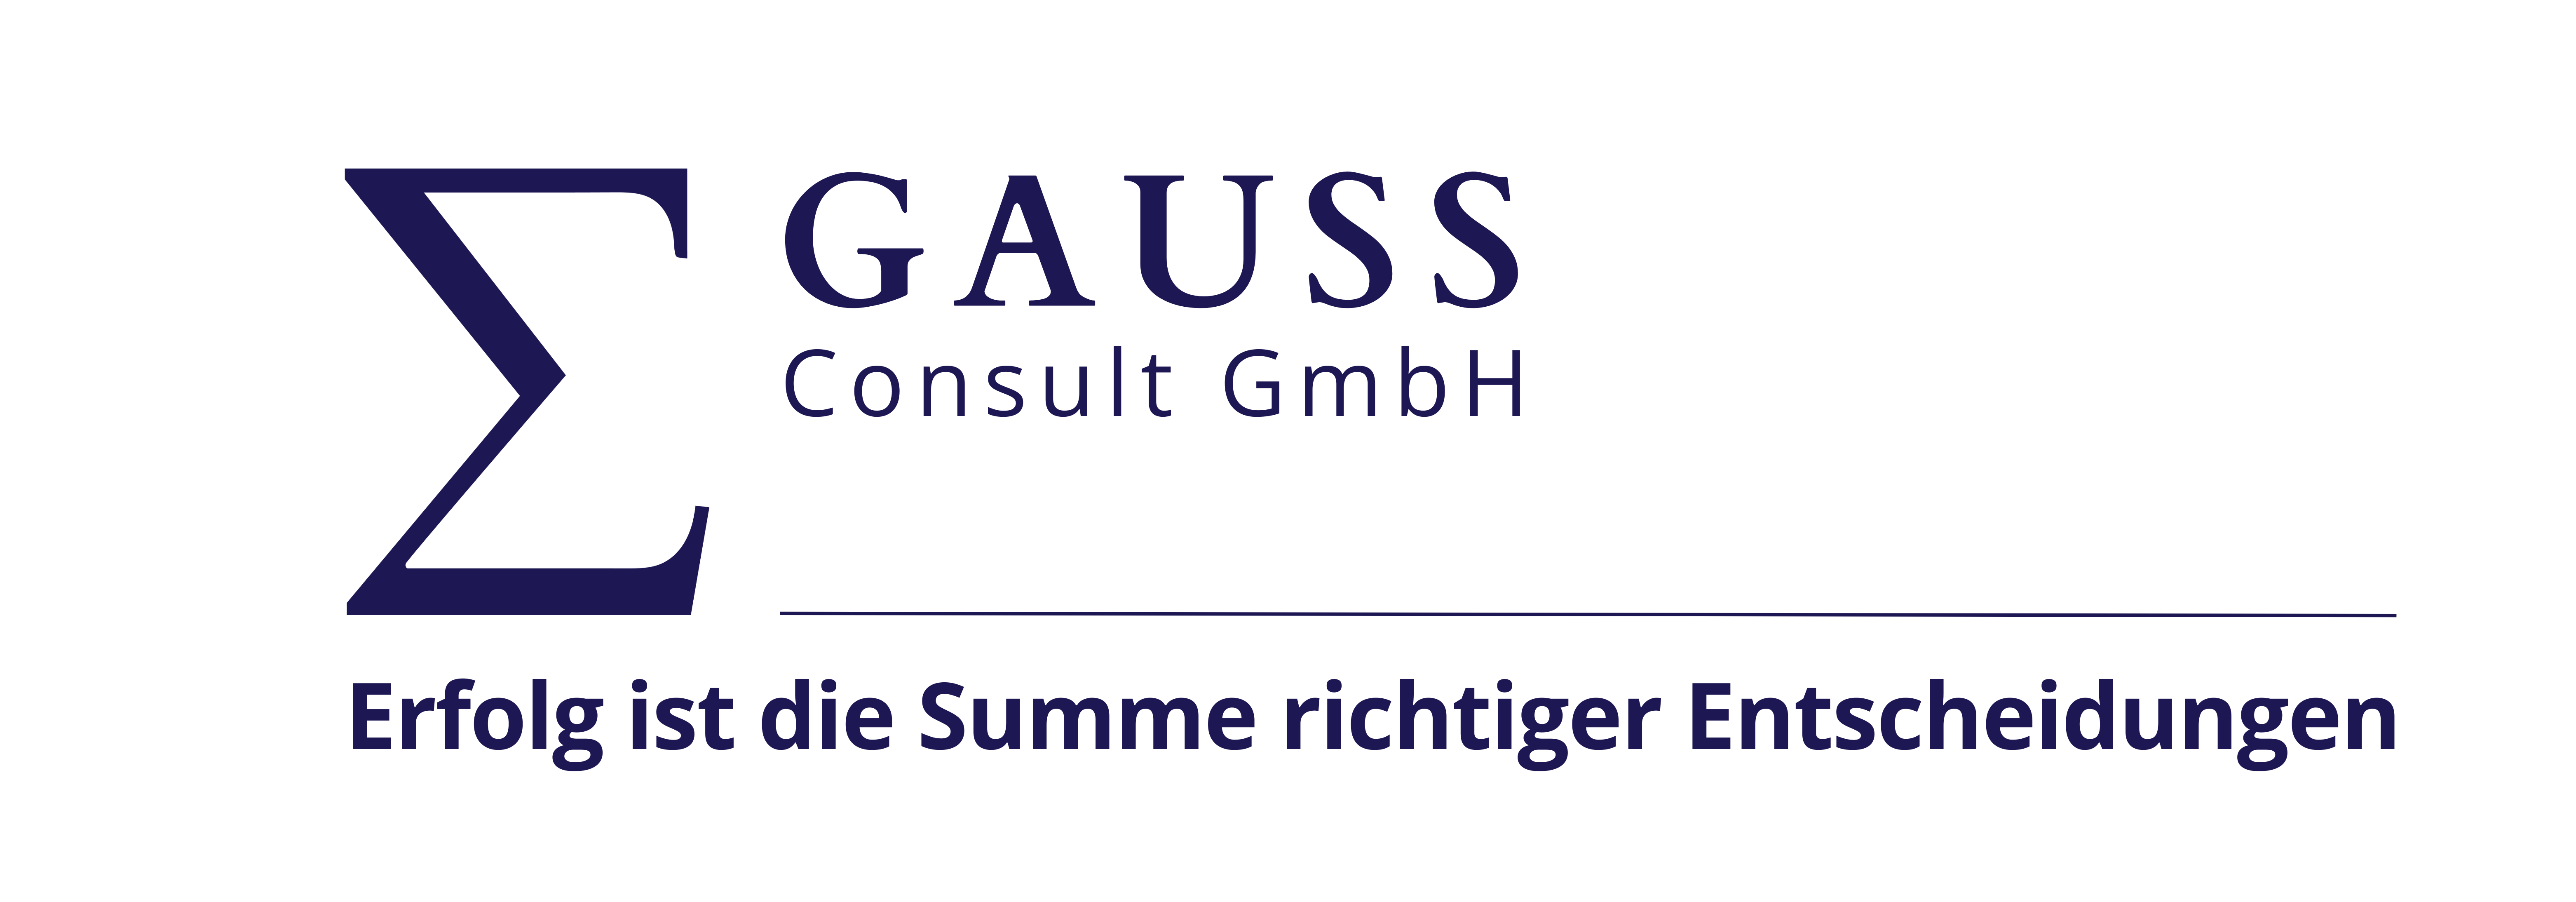 Gauss Consult GmbH Logo